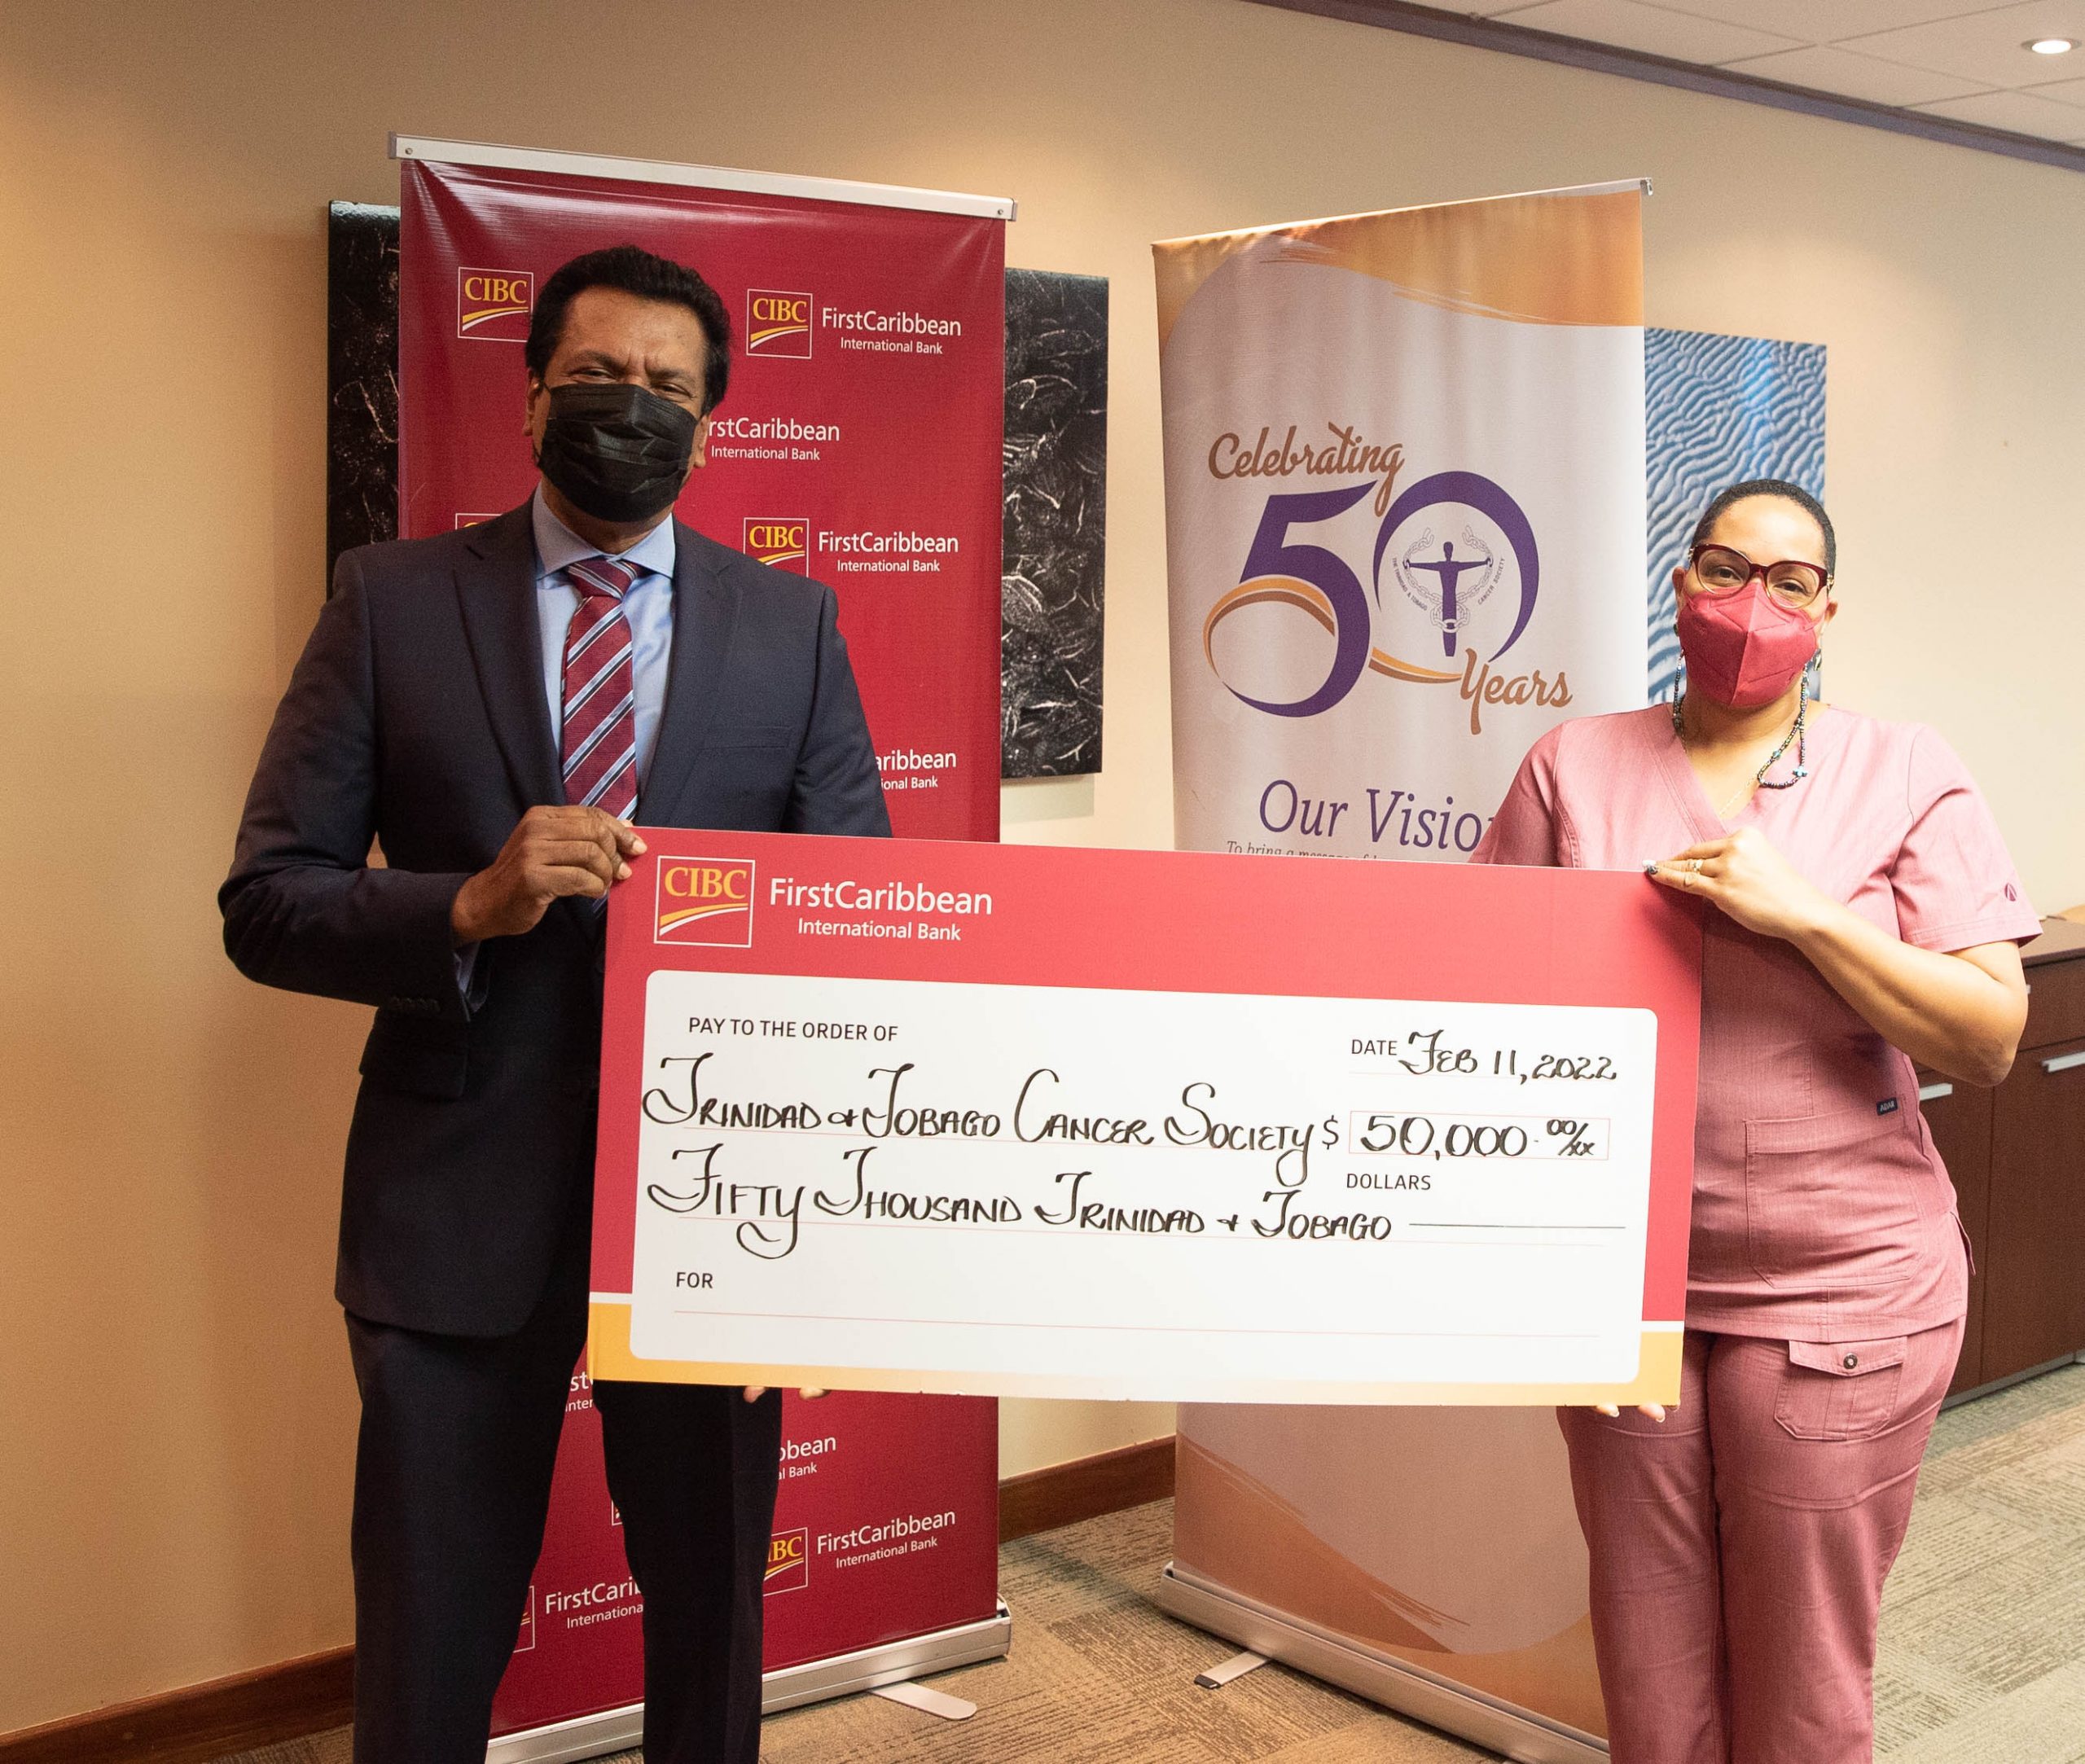 CIBC FirstCaribbean Walk for the Cure raises over US$340k